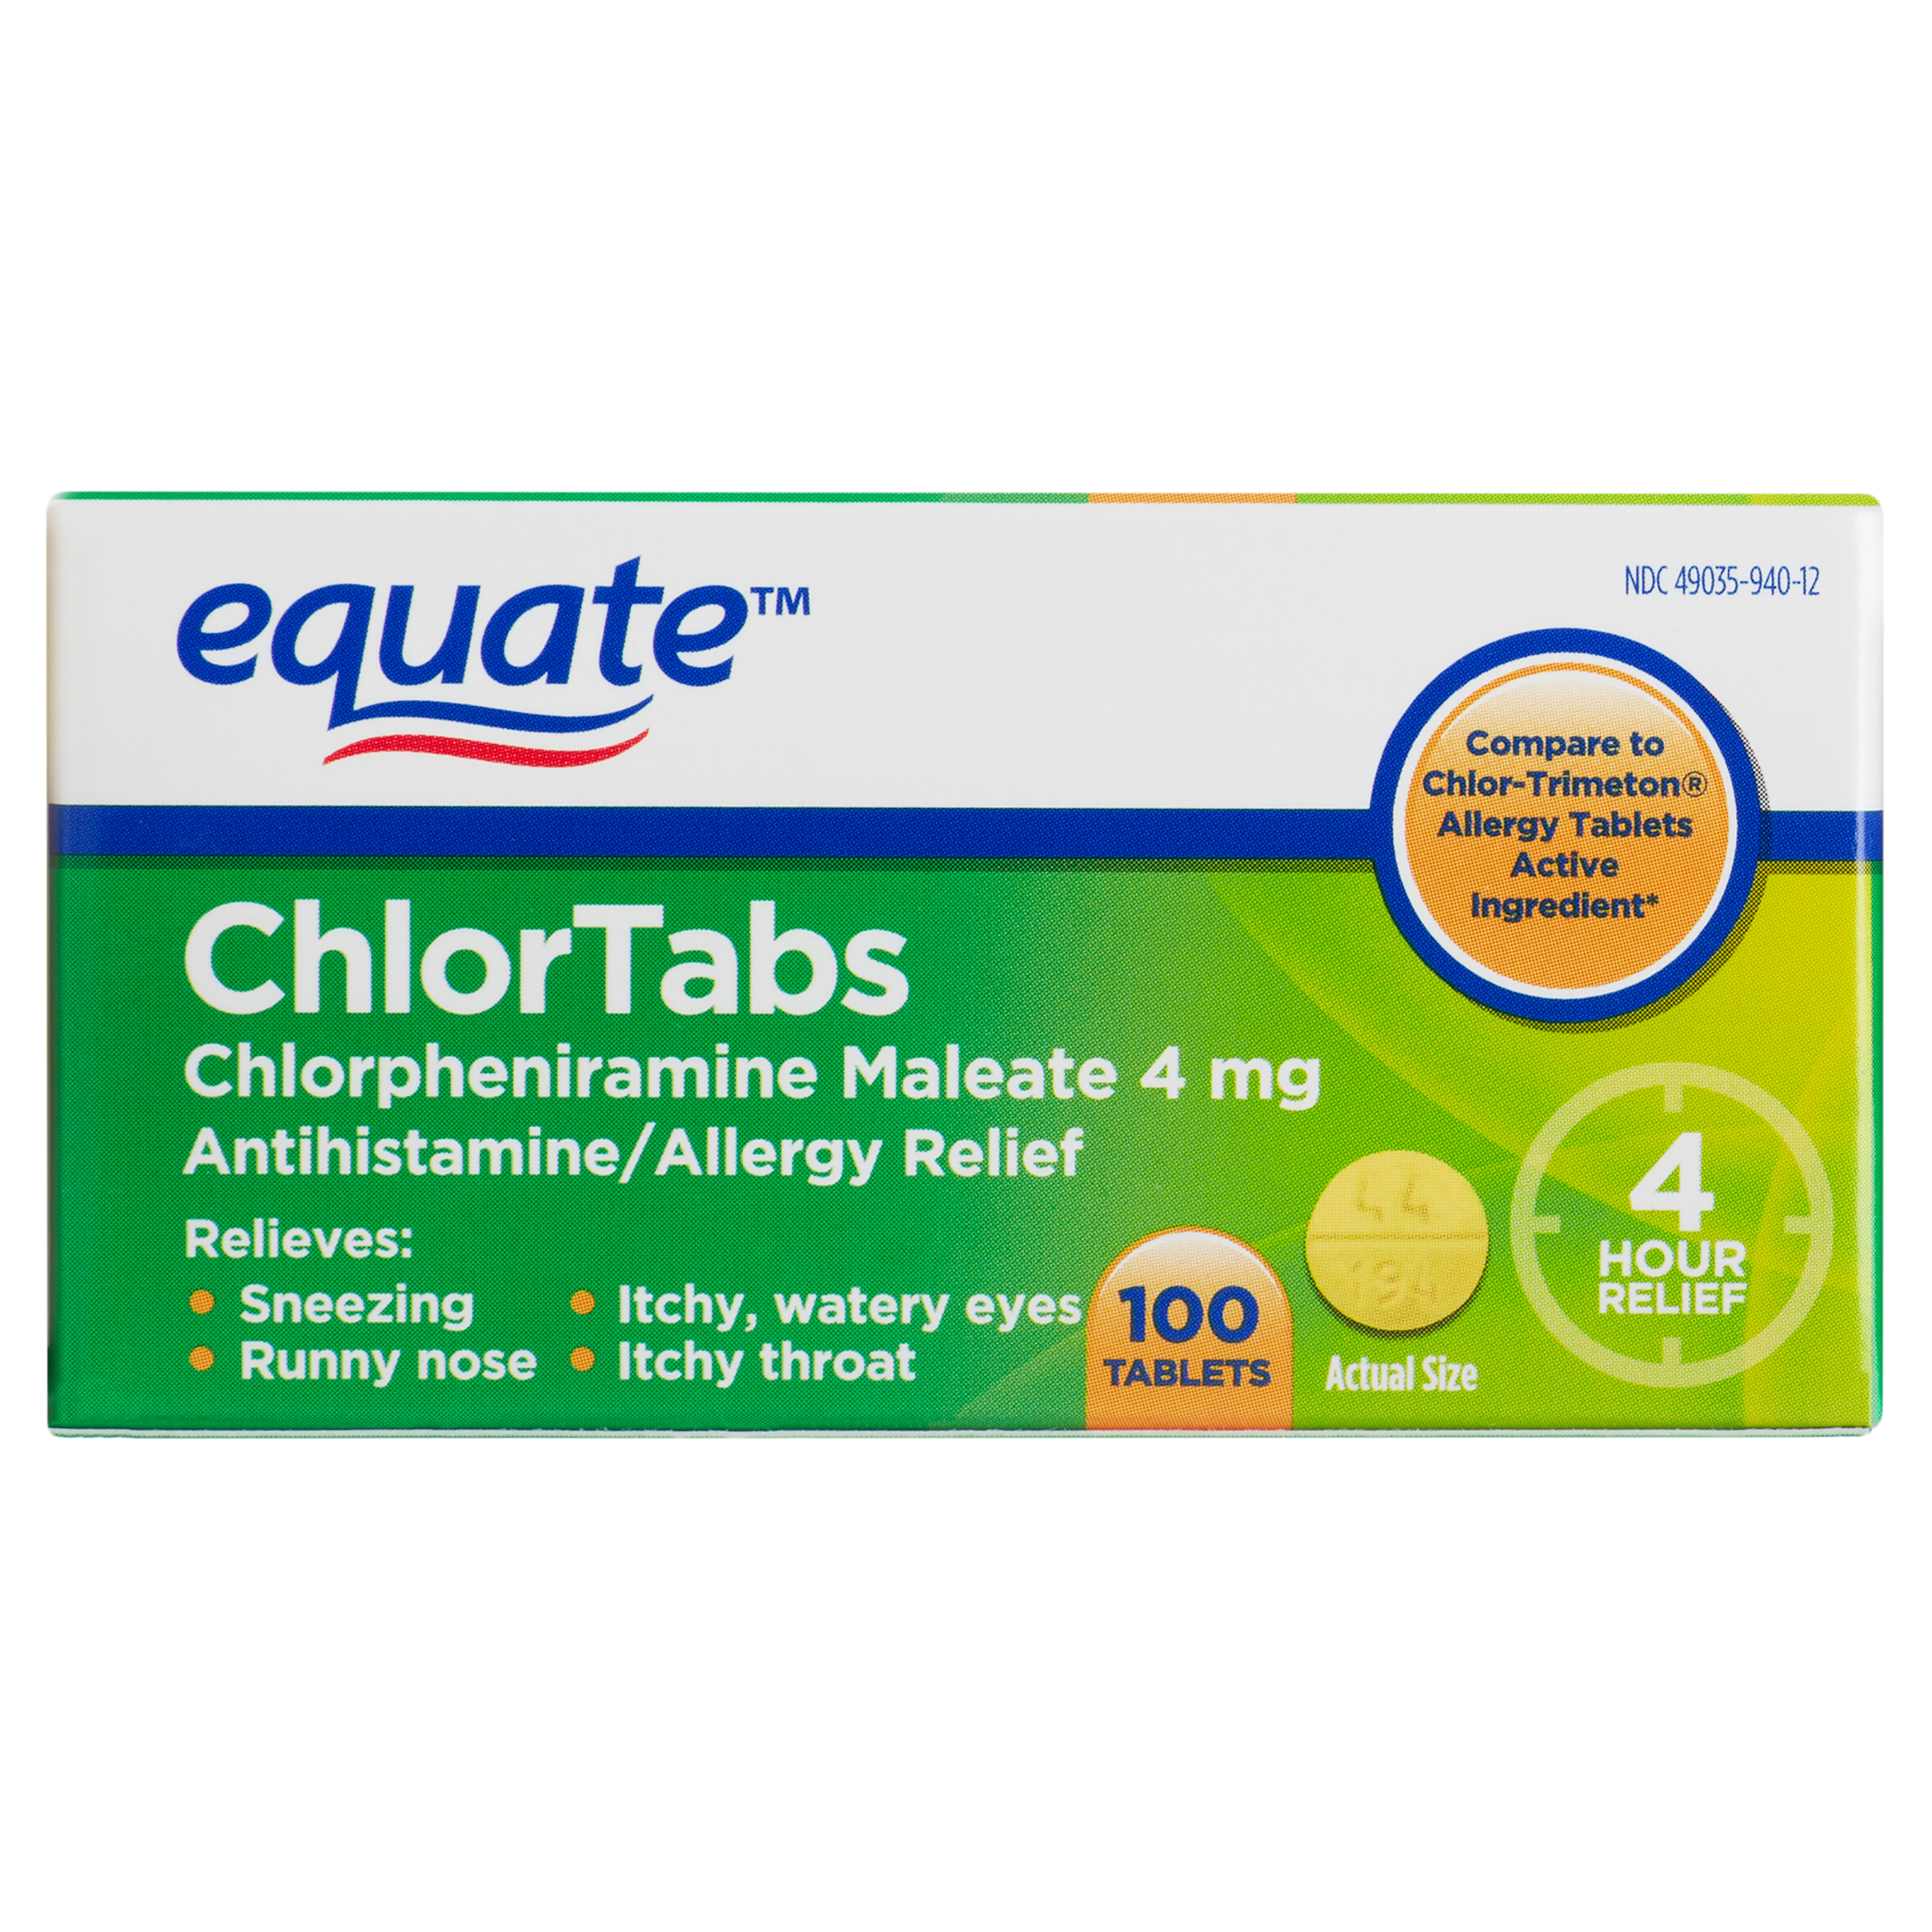 Equate Chlorpheniramine Maleate ChlorTabs Tablets, 4 mg, 100 Count - image 1 of 9